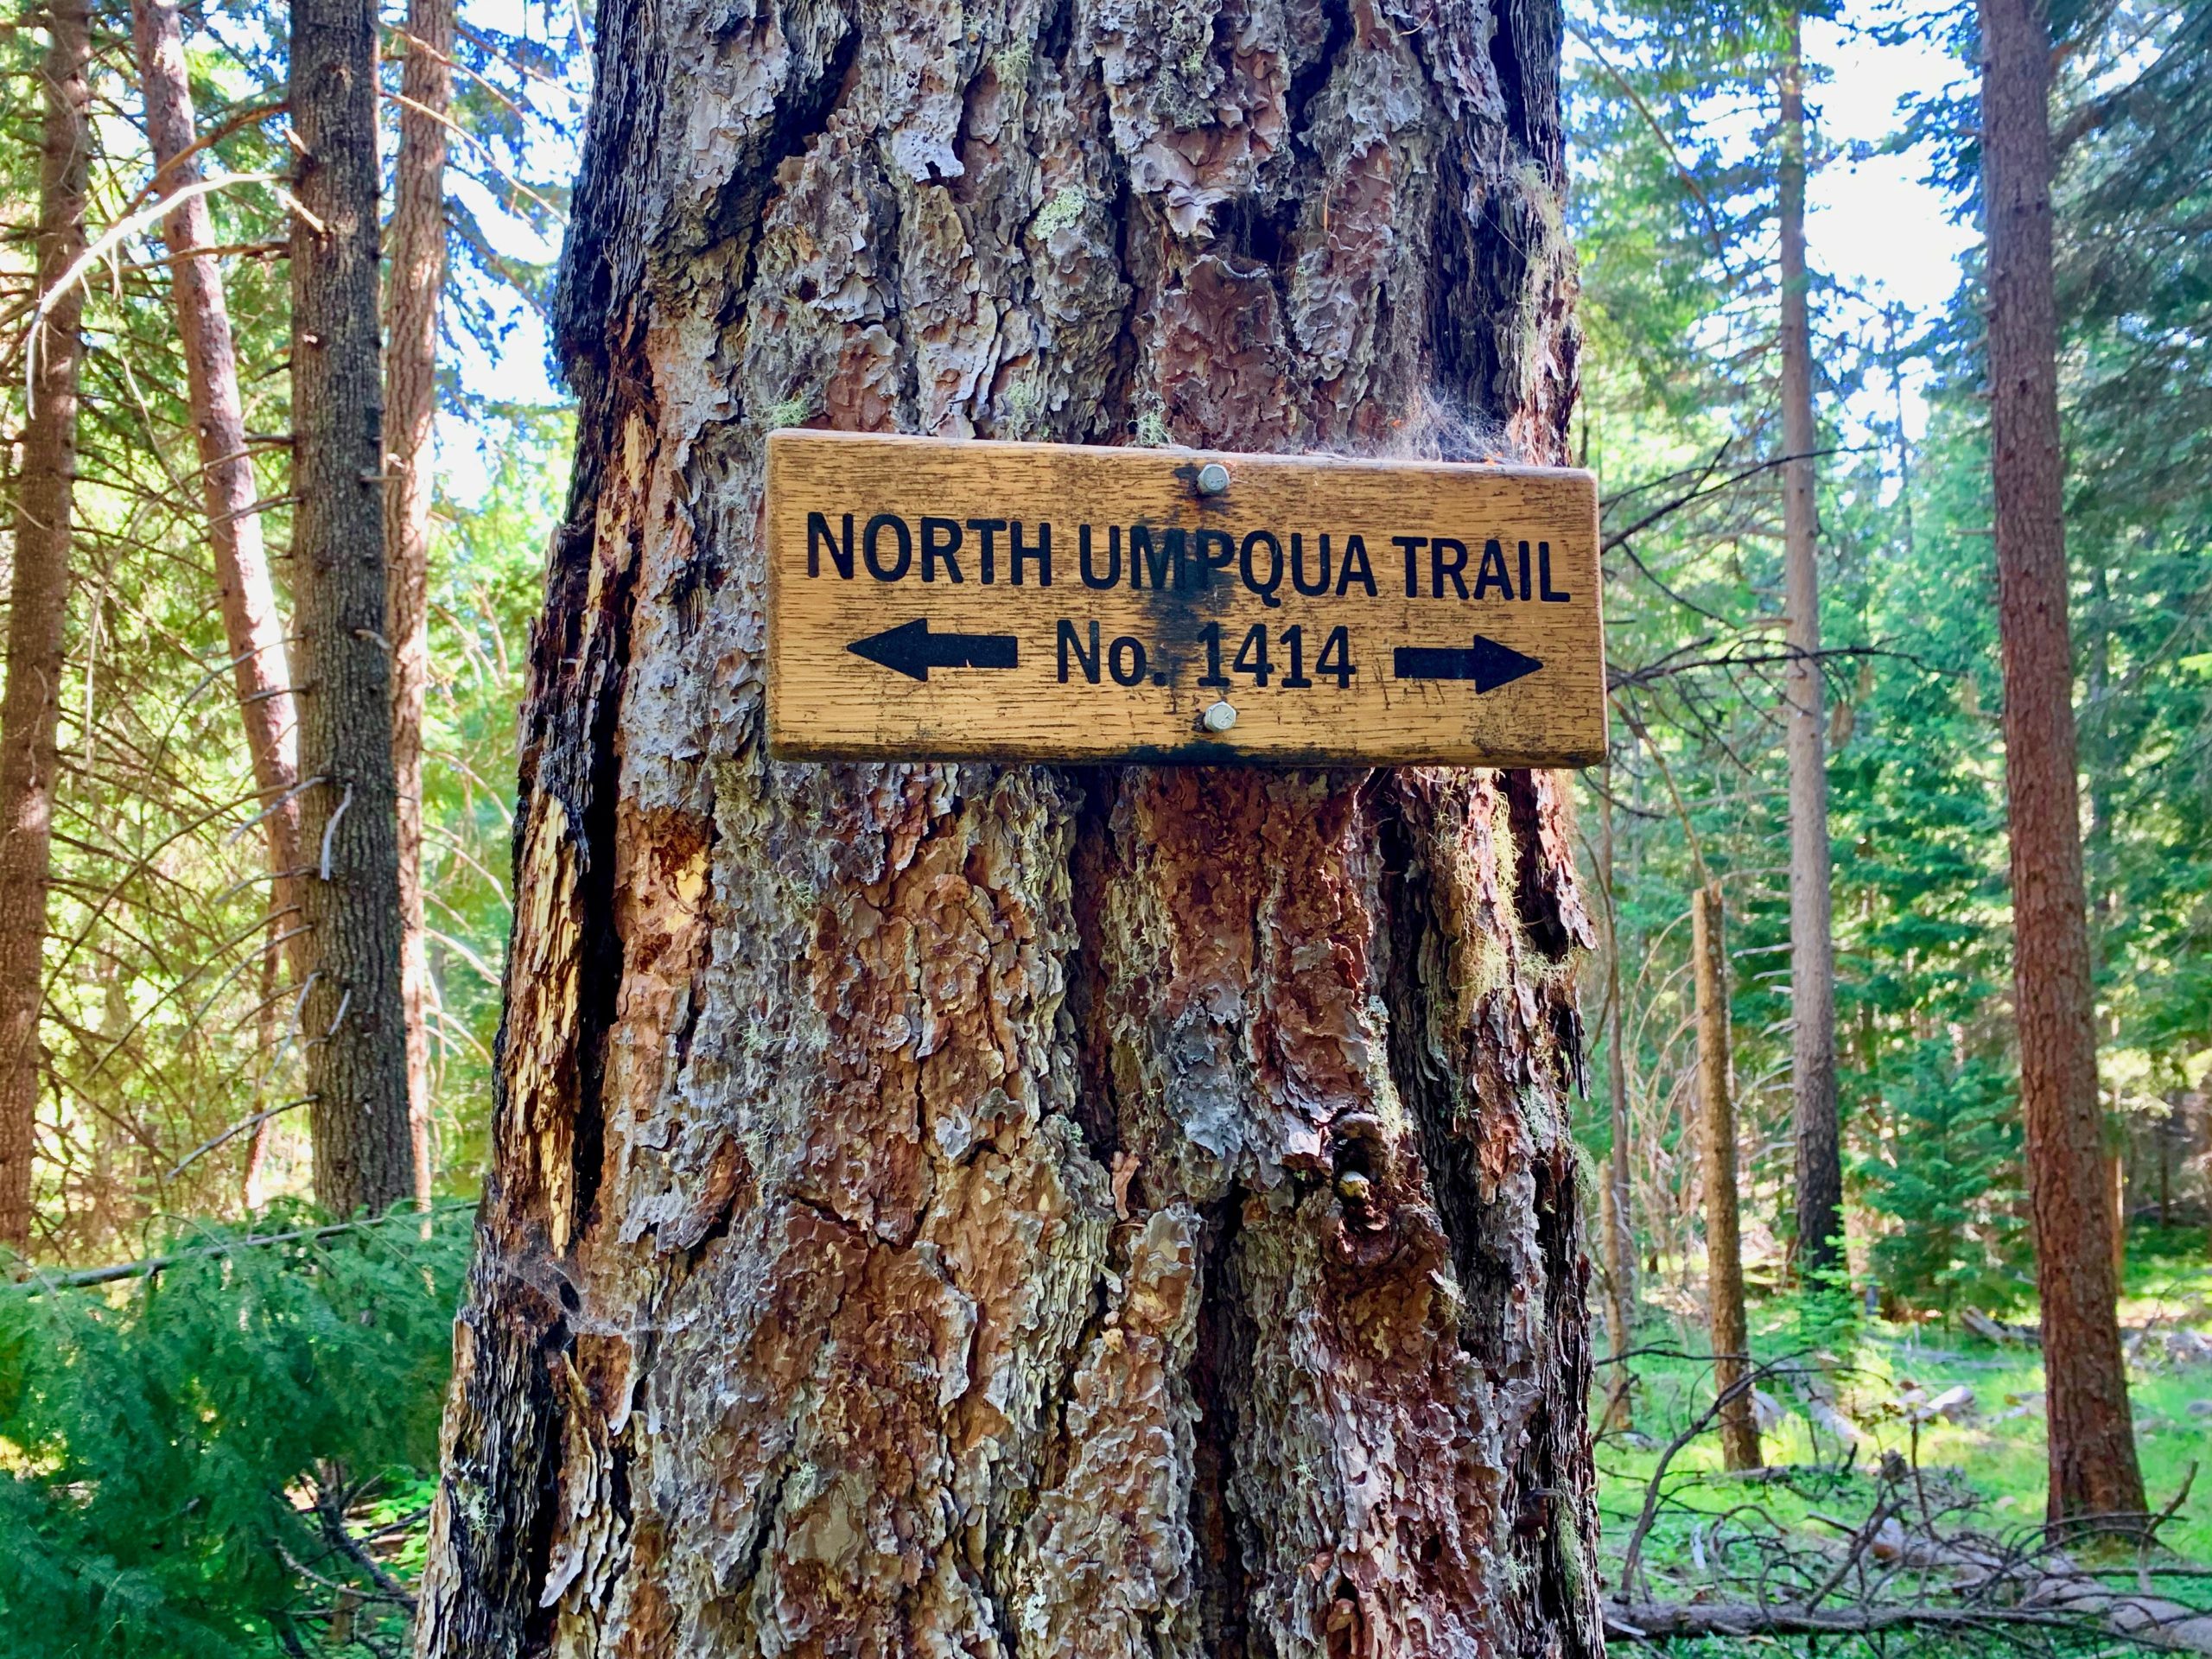 North Umpqua Trail